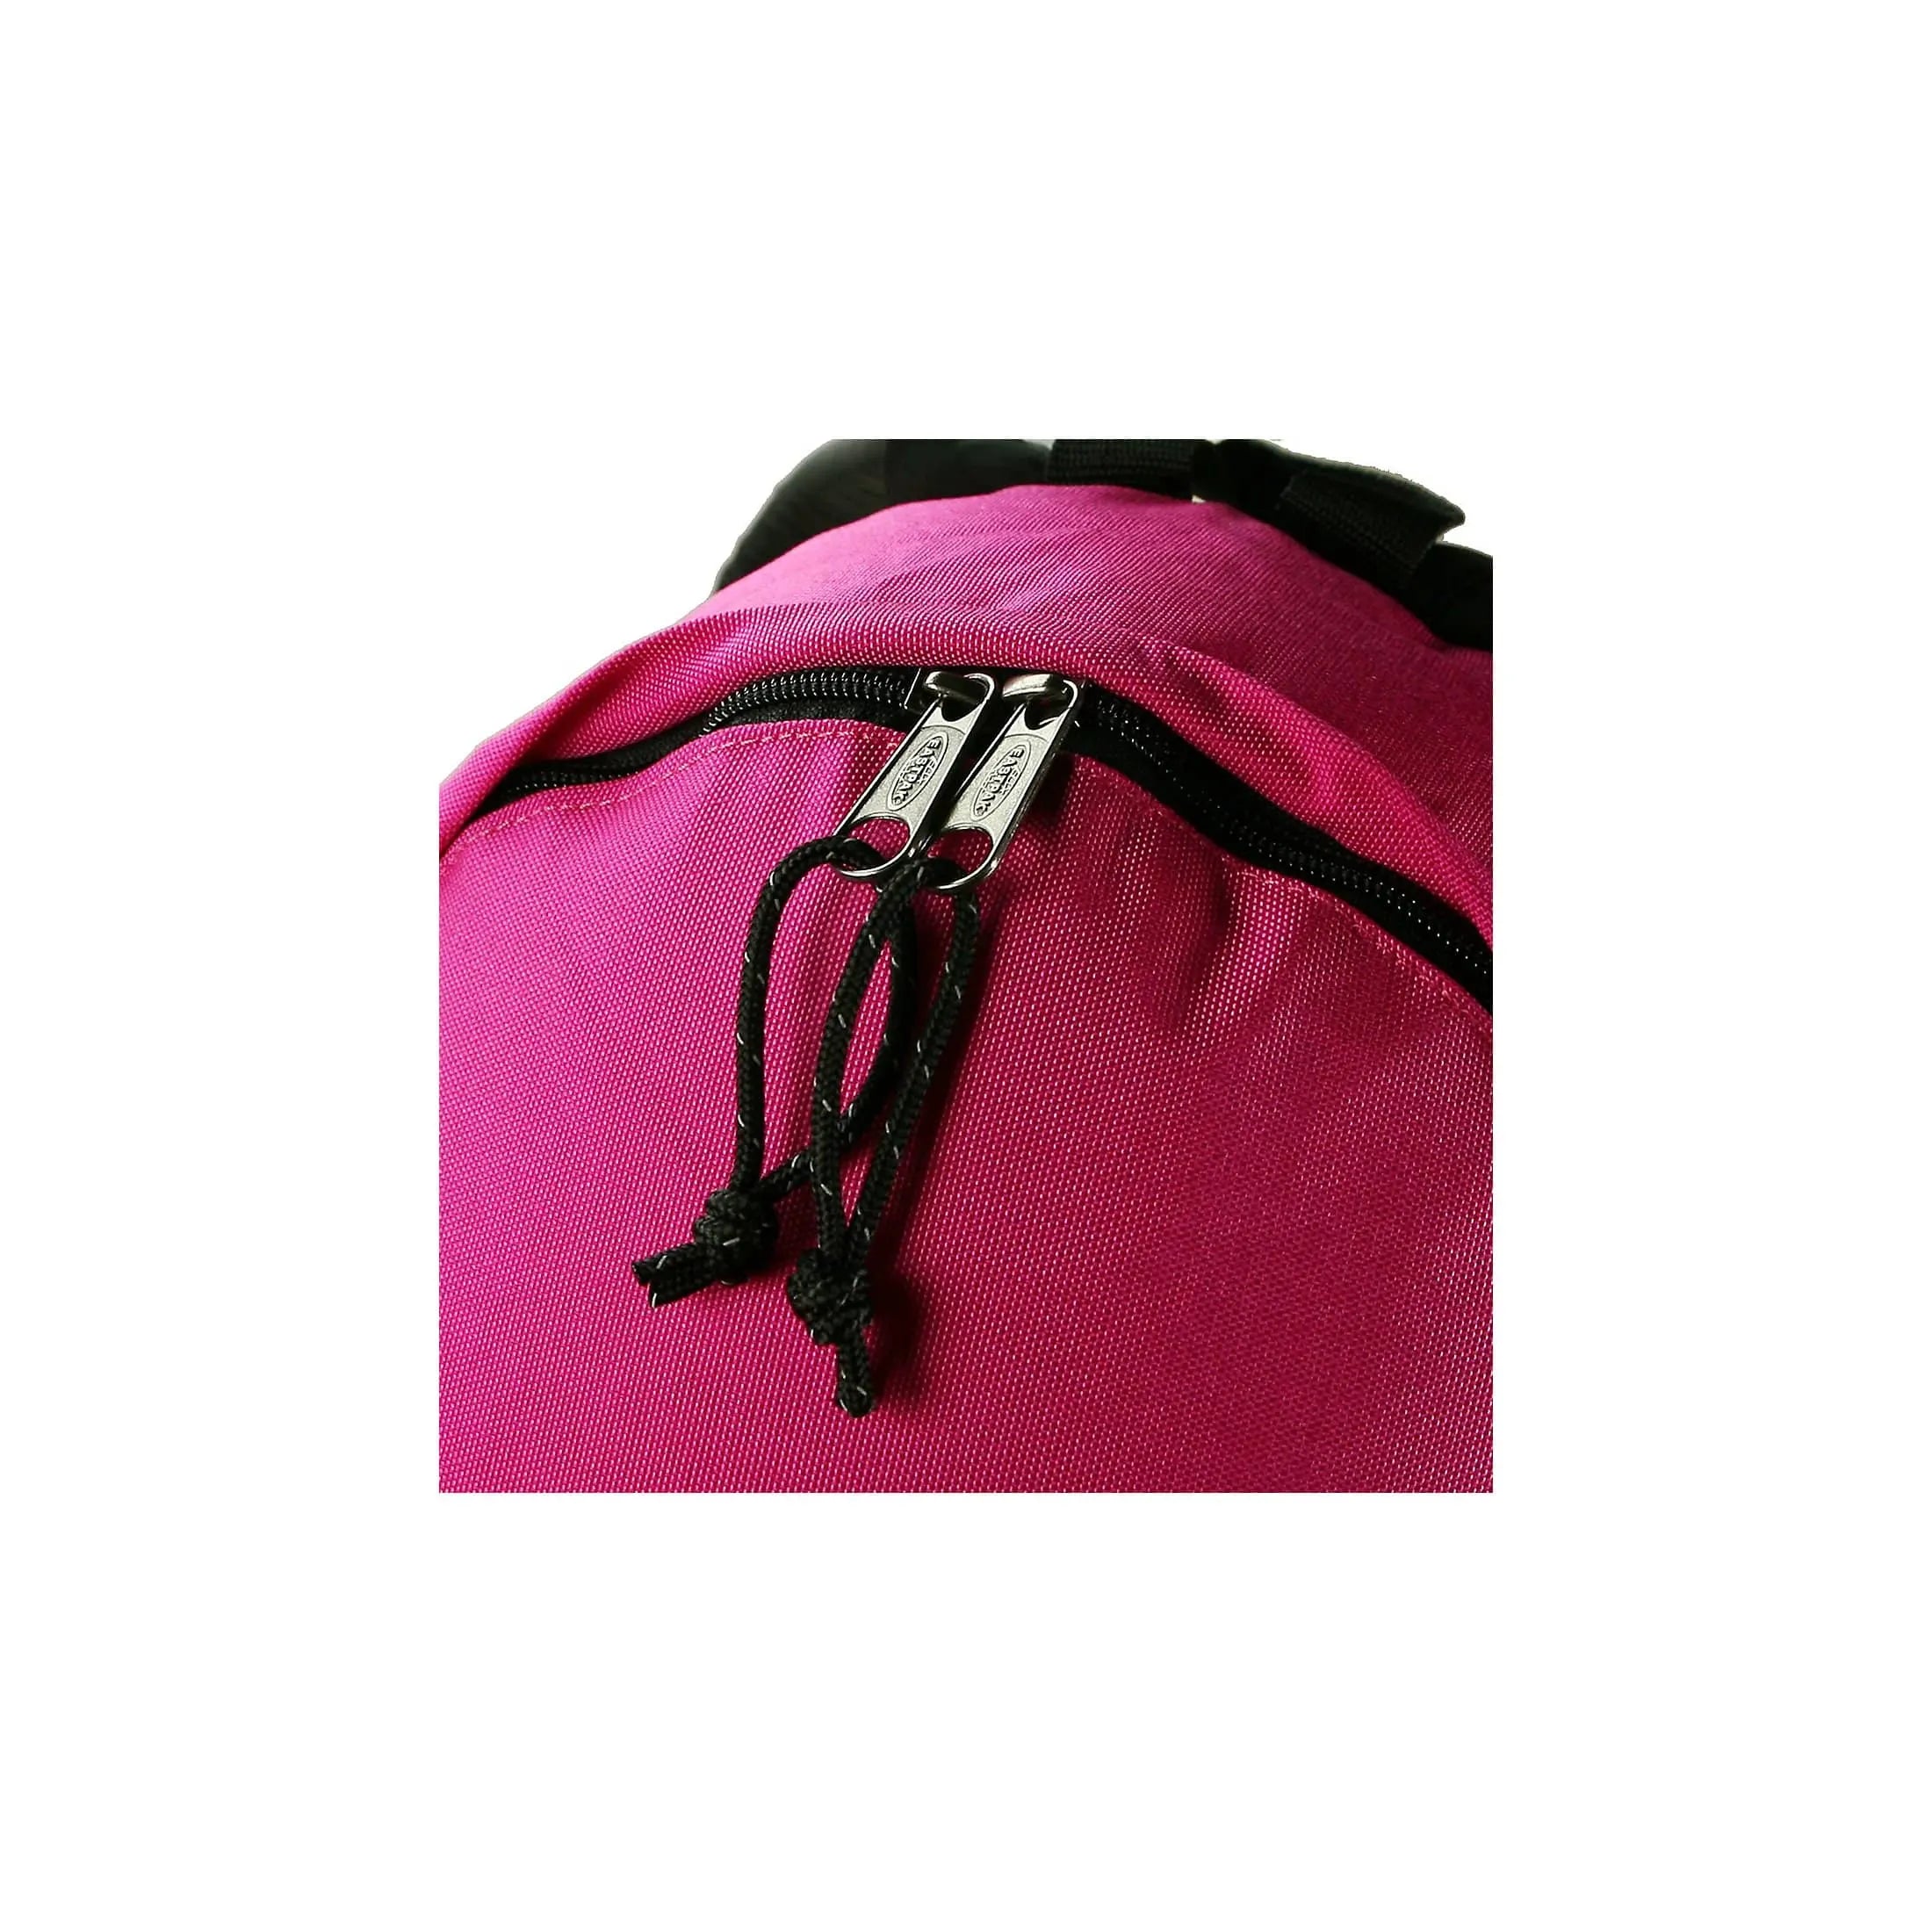 Eastpak Authentic Orbit leisure backpack 33 cm - sunday gray